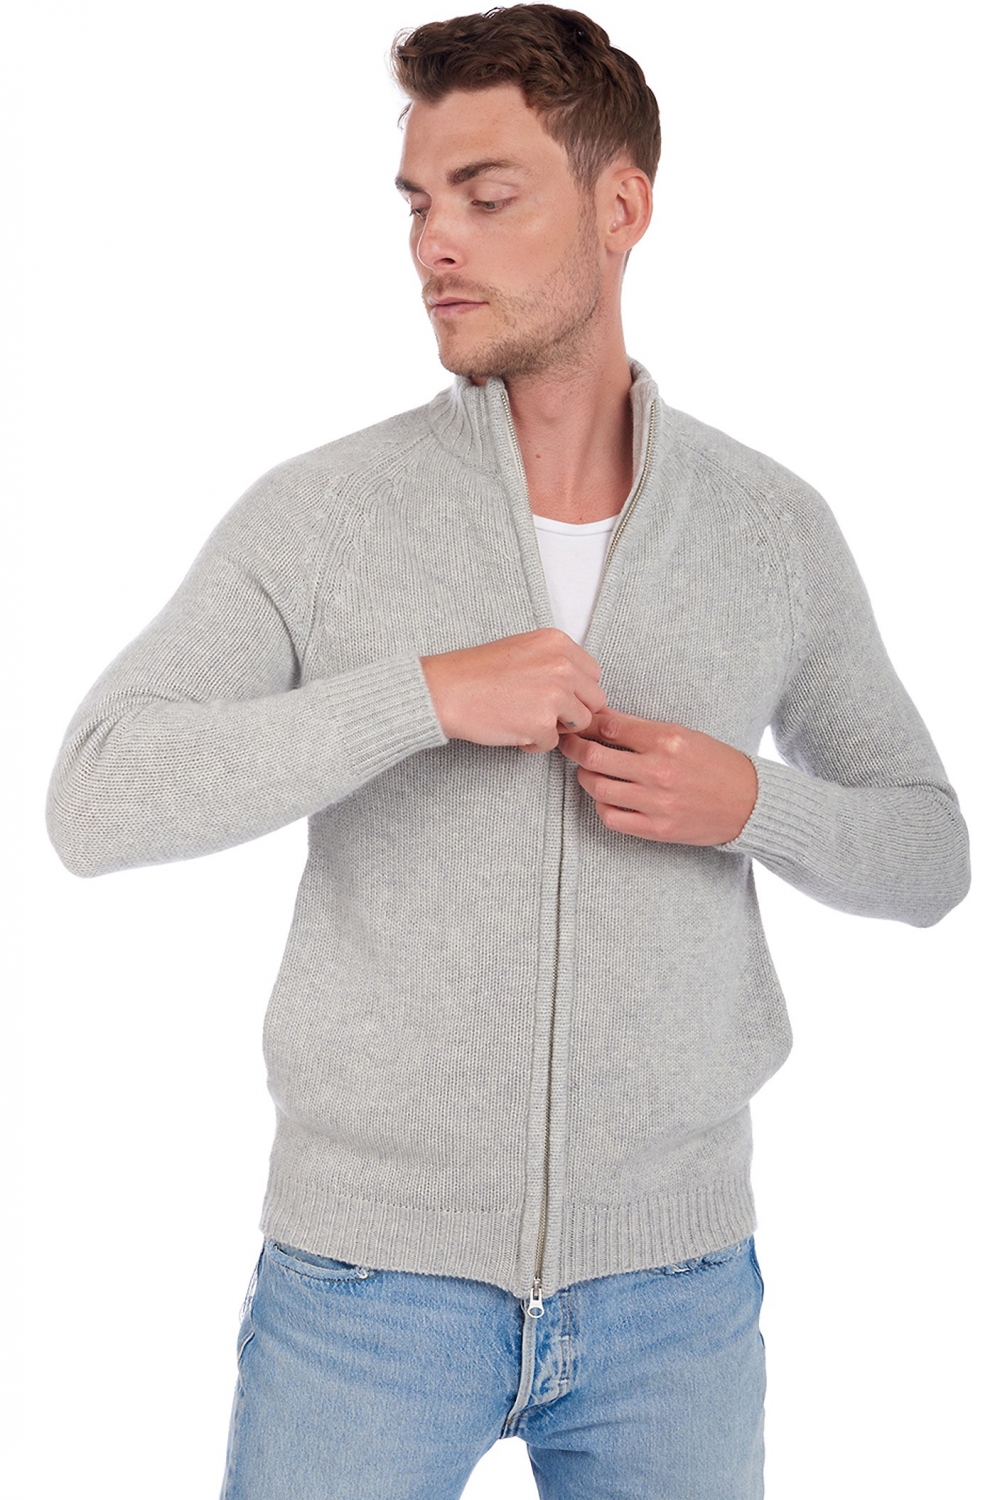 Cashmere men waistcoat sleeveless sweaters argos flanelle chine 2xl